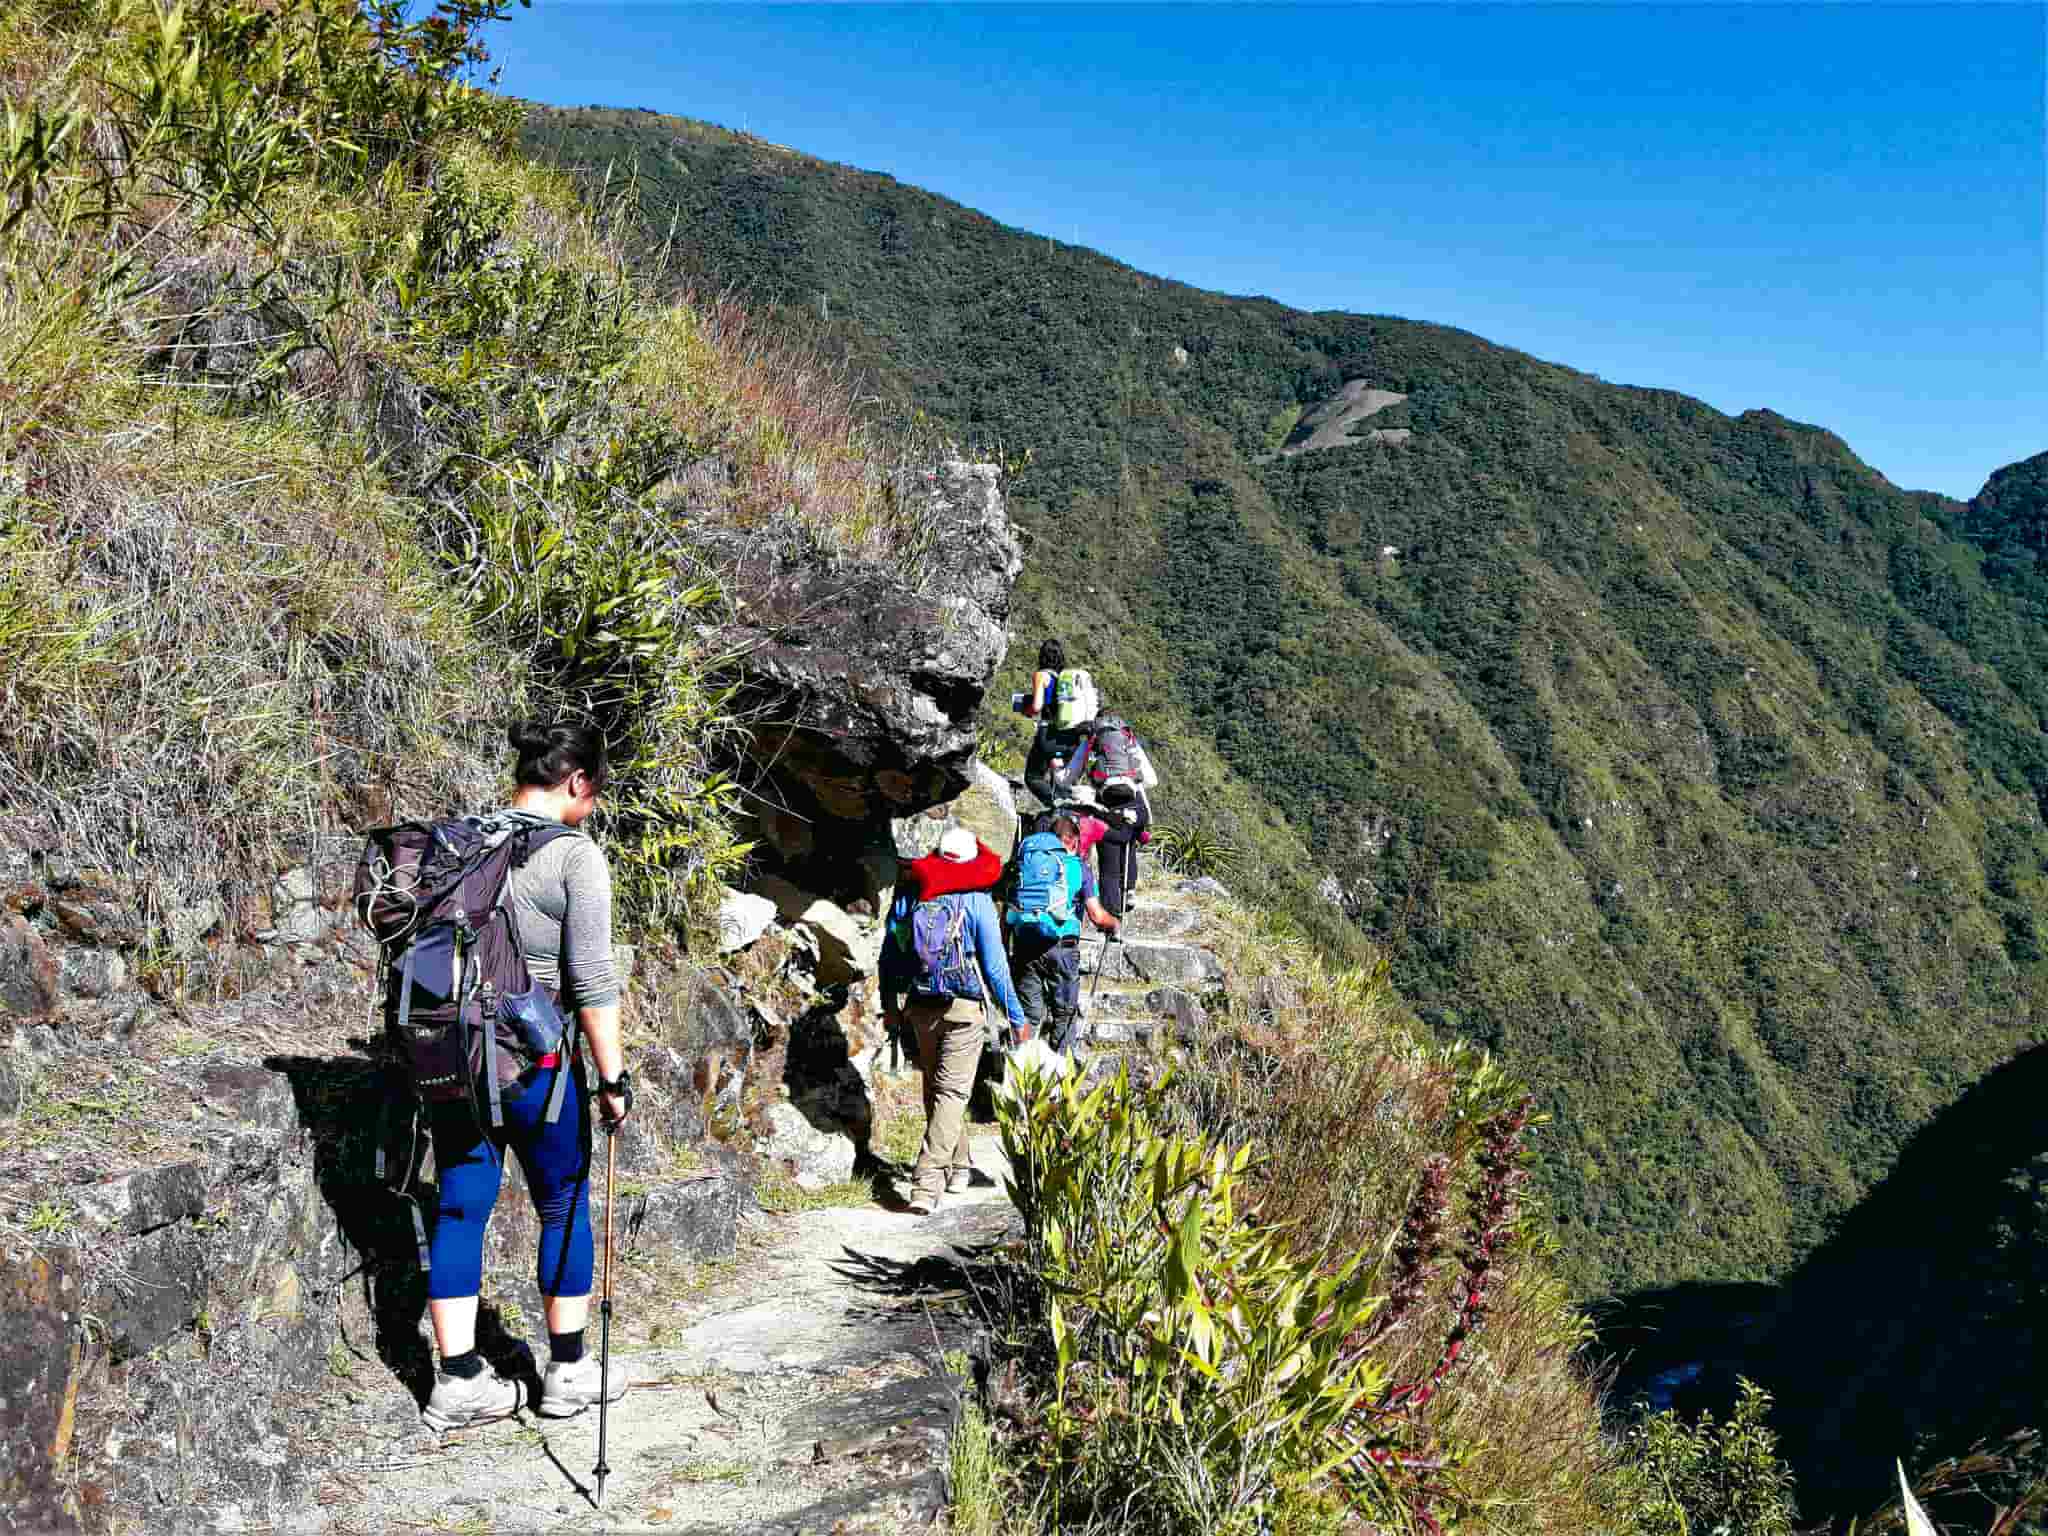 The Inca Trail - Huchuy Qosqo + Short Inca Trail 4 days